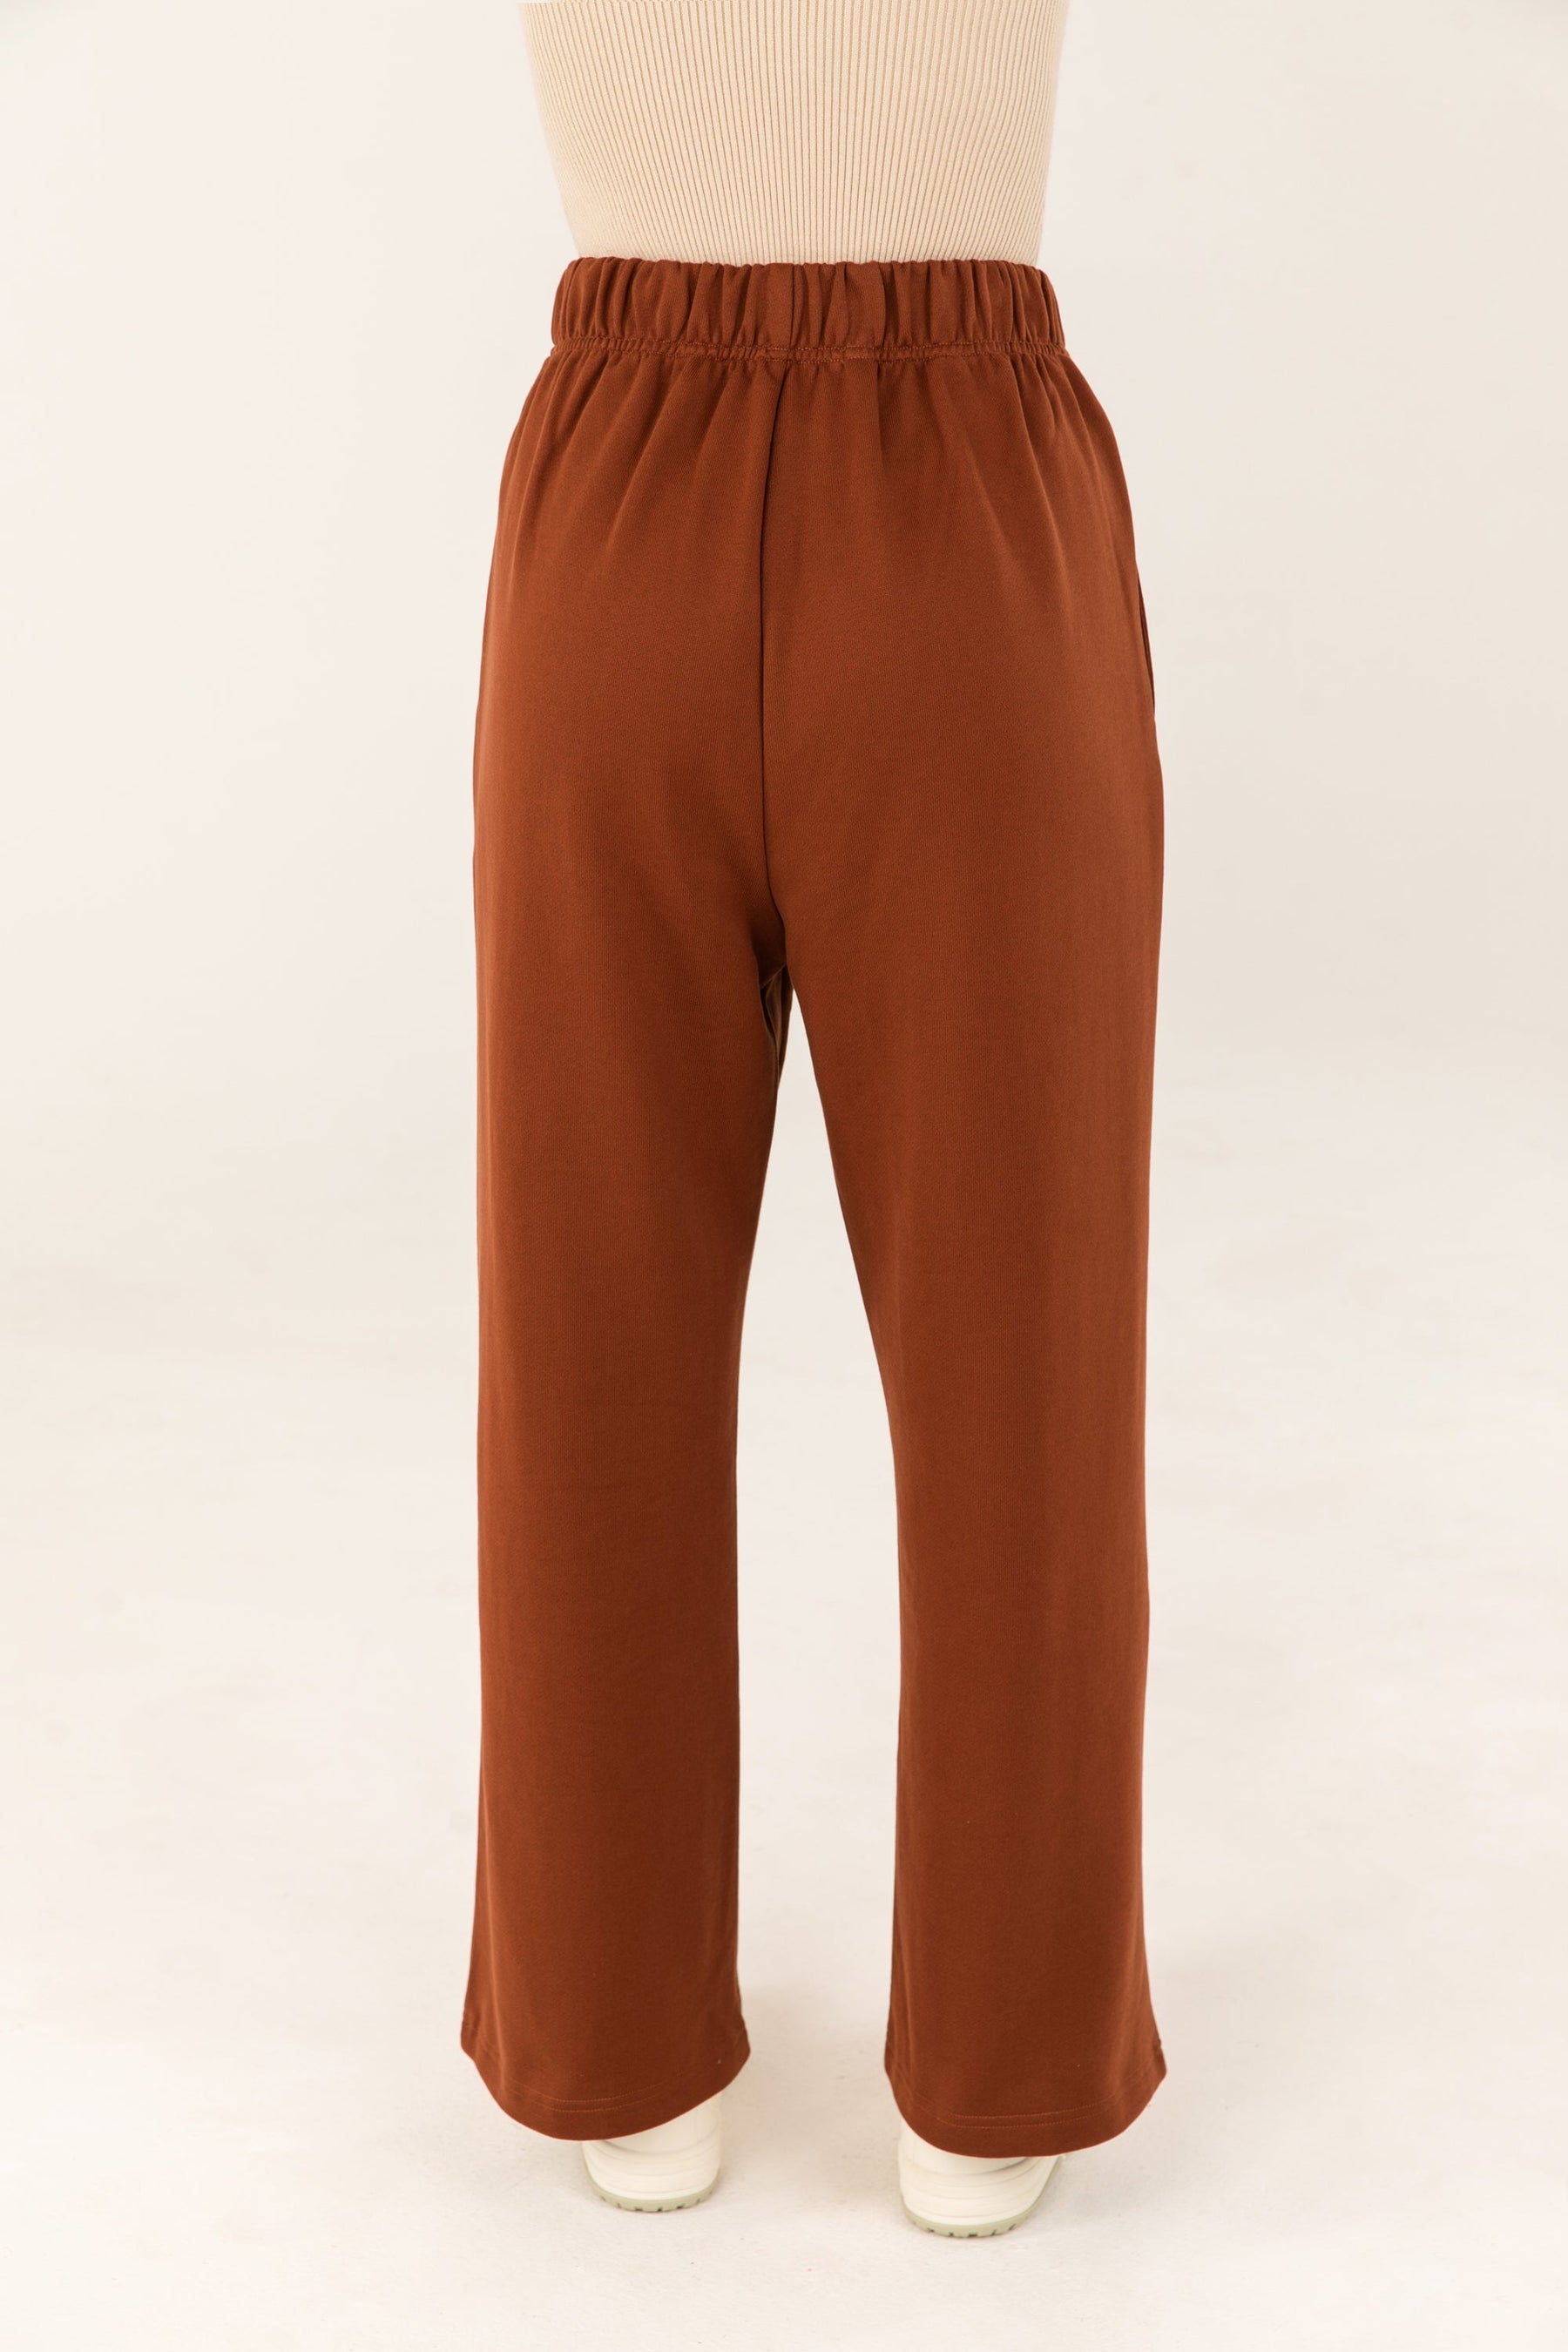 Wide Leg Seam Front Cotton Sweatpants - Brown Veiled 